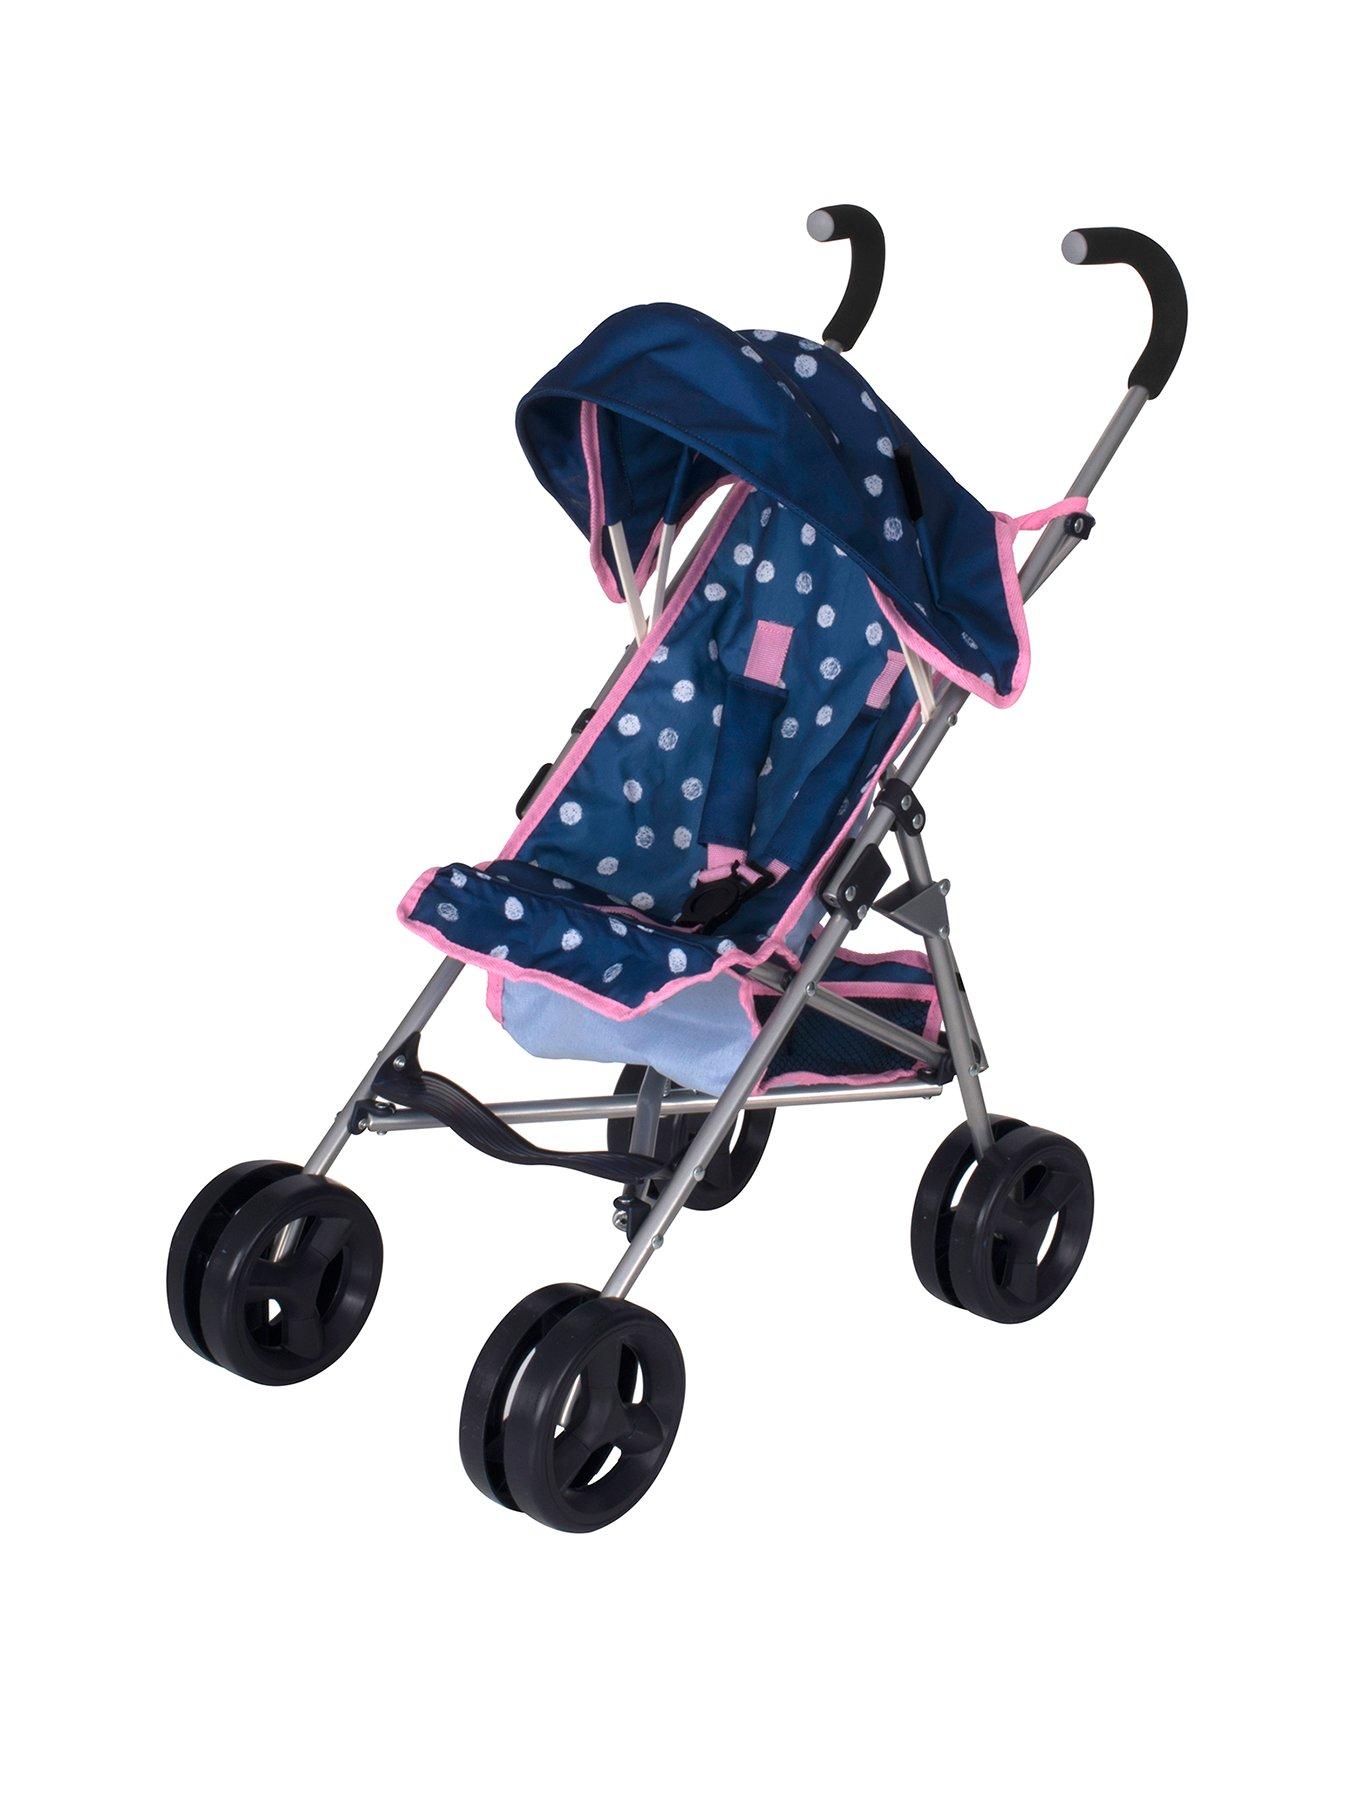 mamas and papas junior stroller